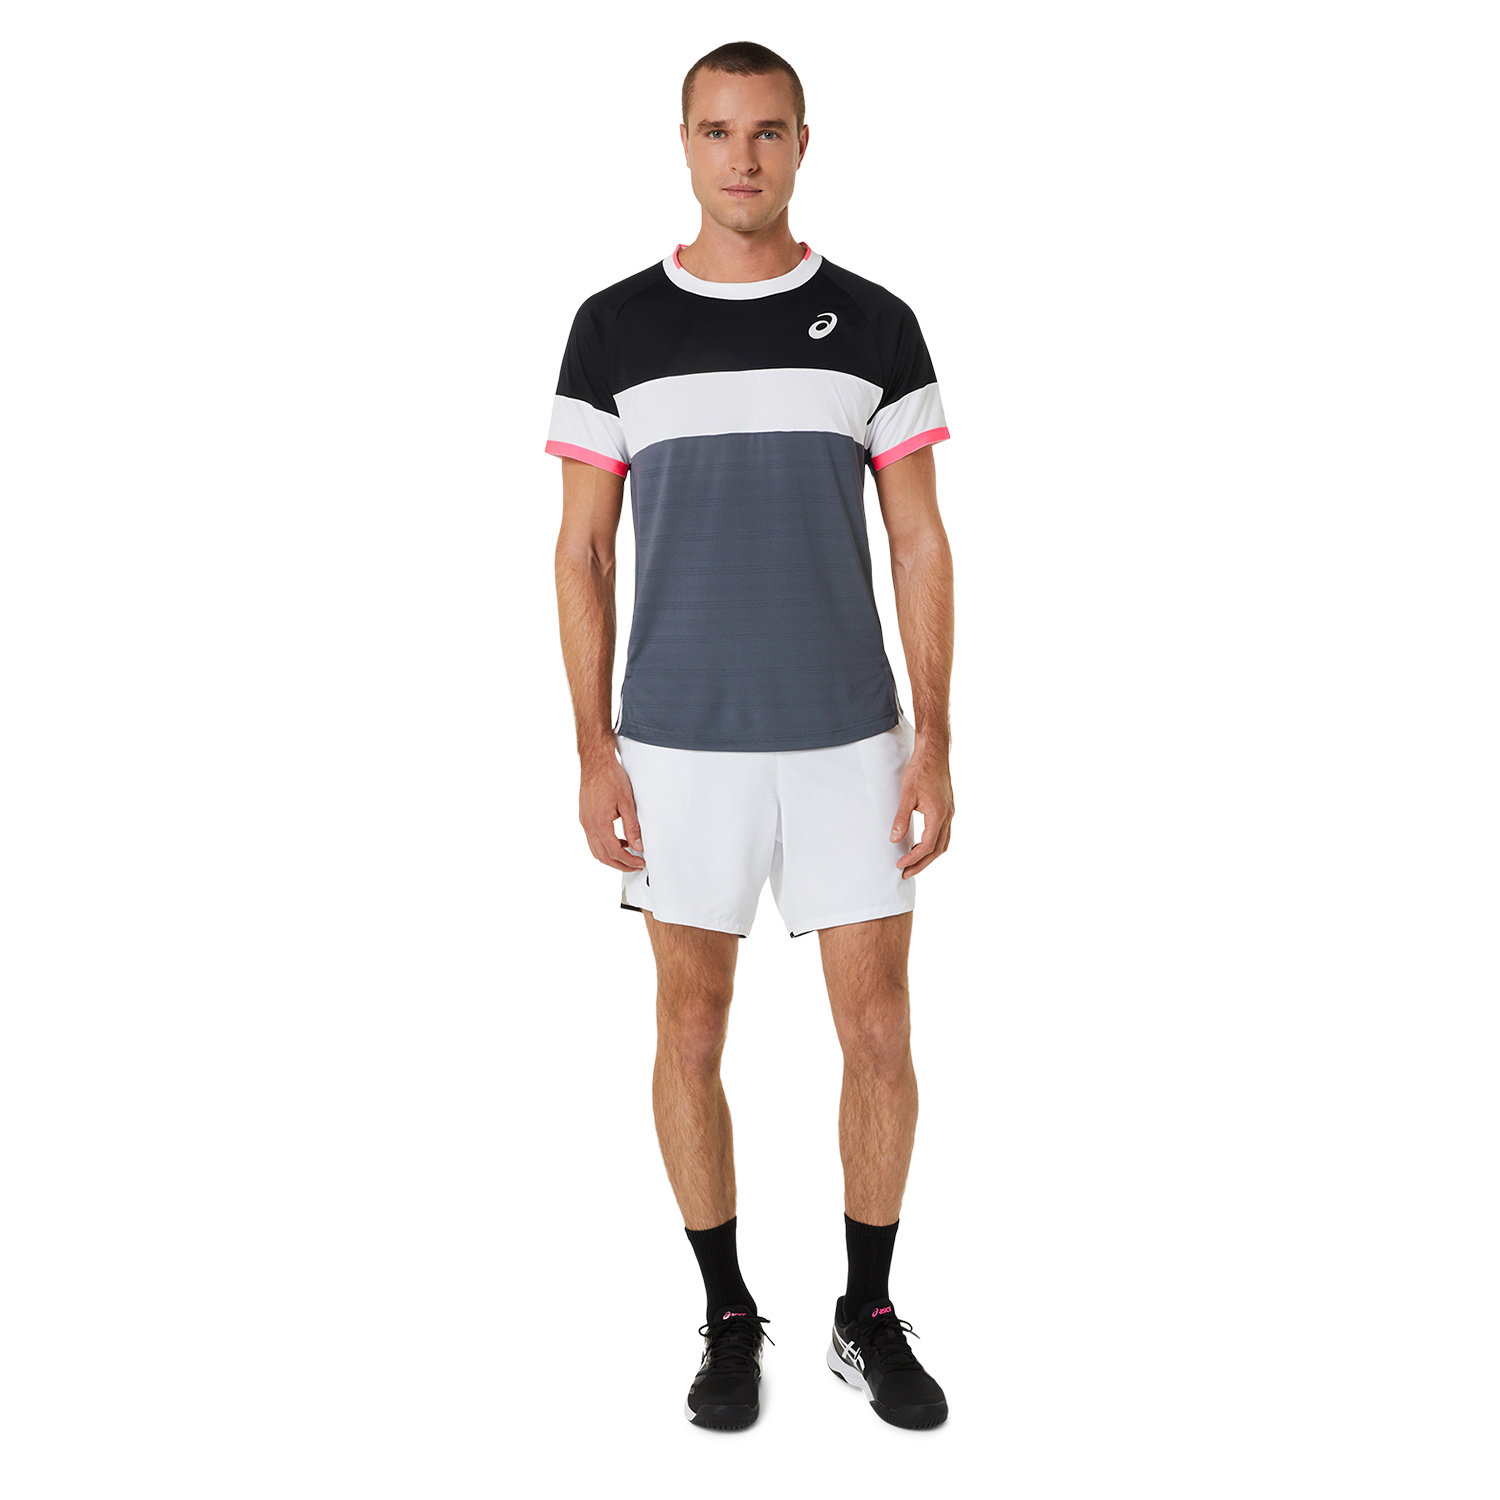 Asics Match Camiseta - Performance Black/Carrier Grey